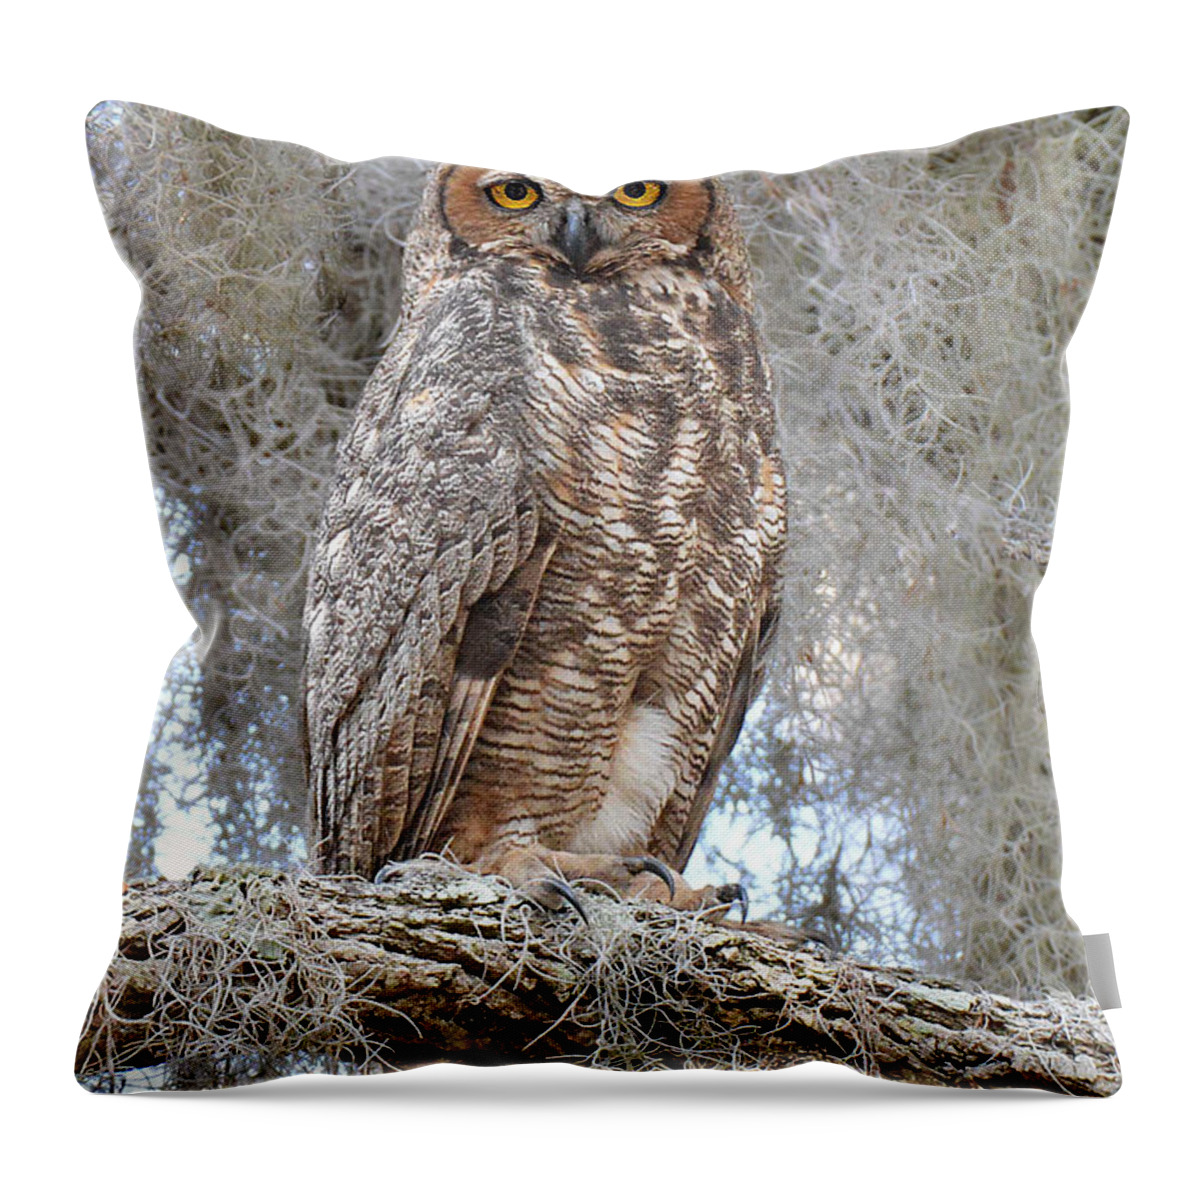 Bird Throw Pillow featuring the photograph Great Horned Owl by Alan Lenk